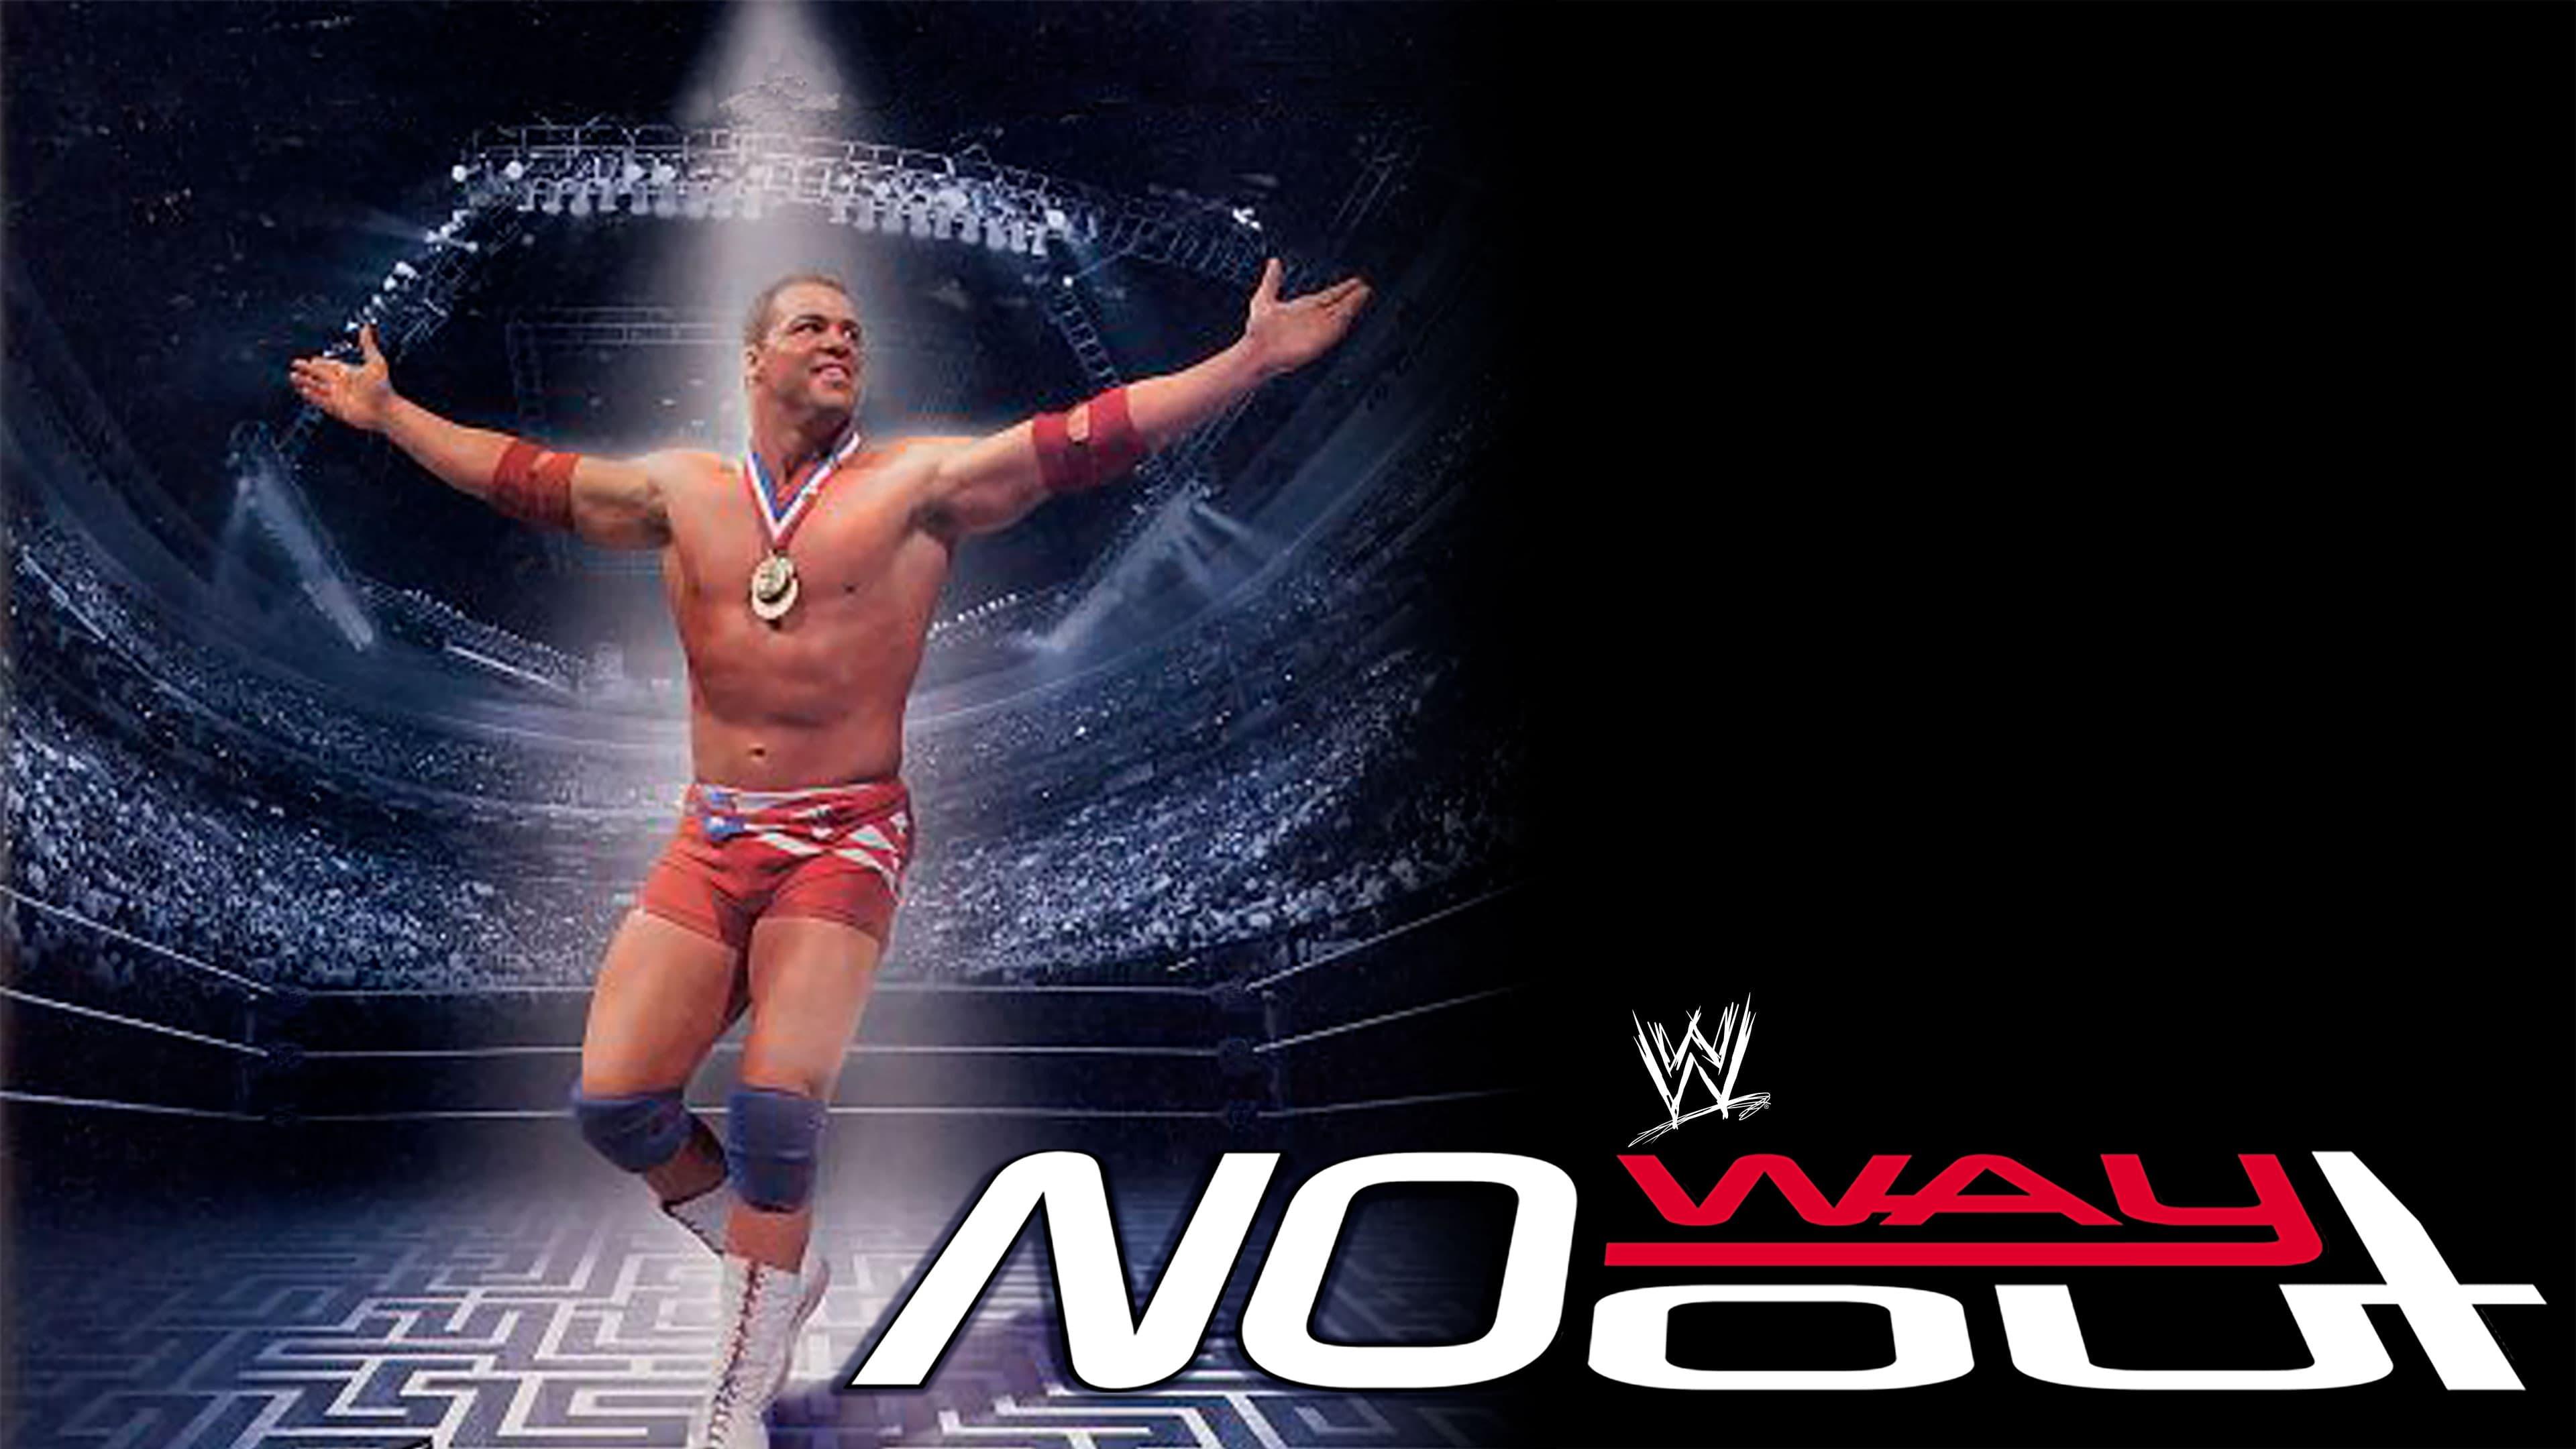 WWE No Way Out 2001 backdrop